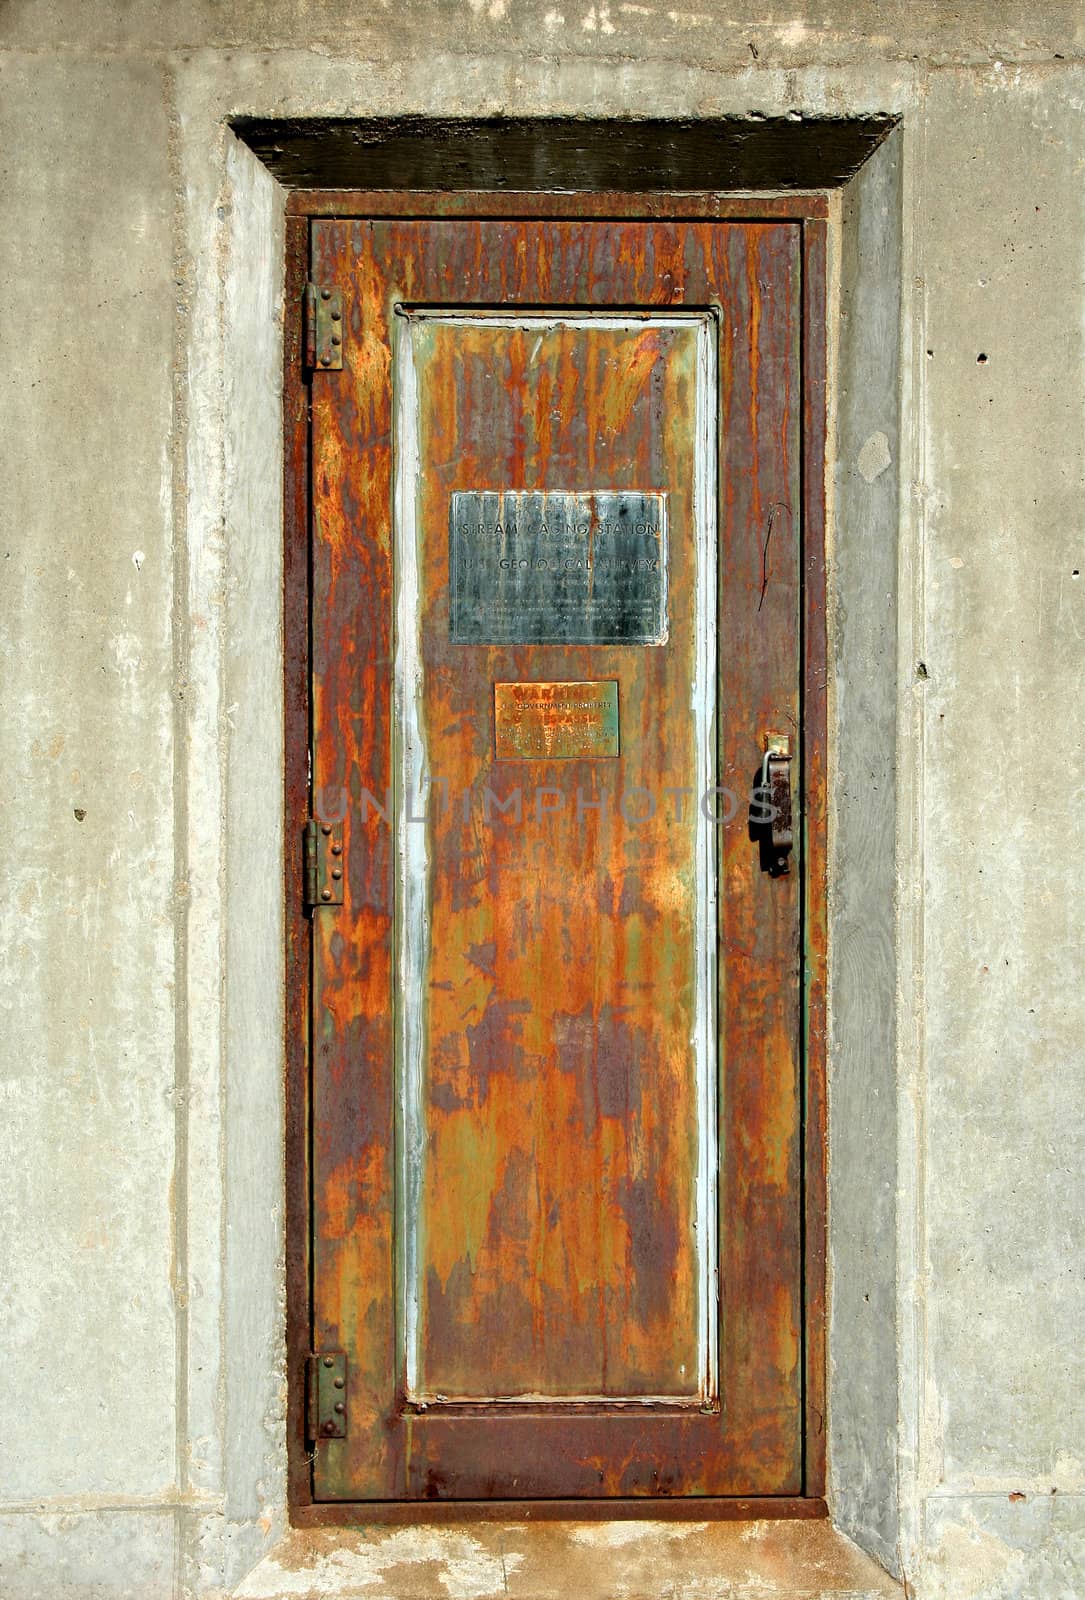 A Old weathered metal door